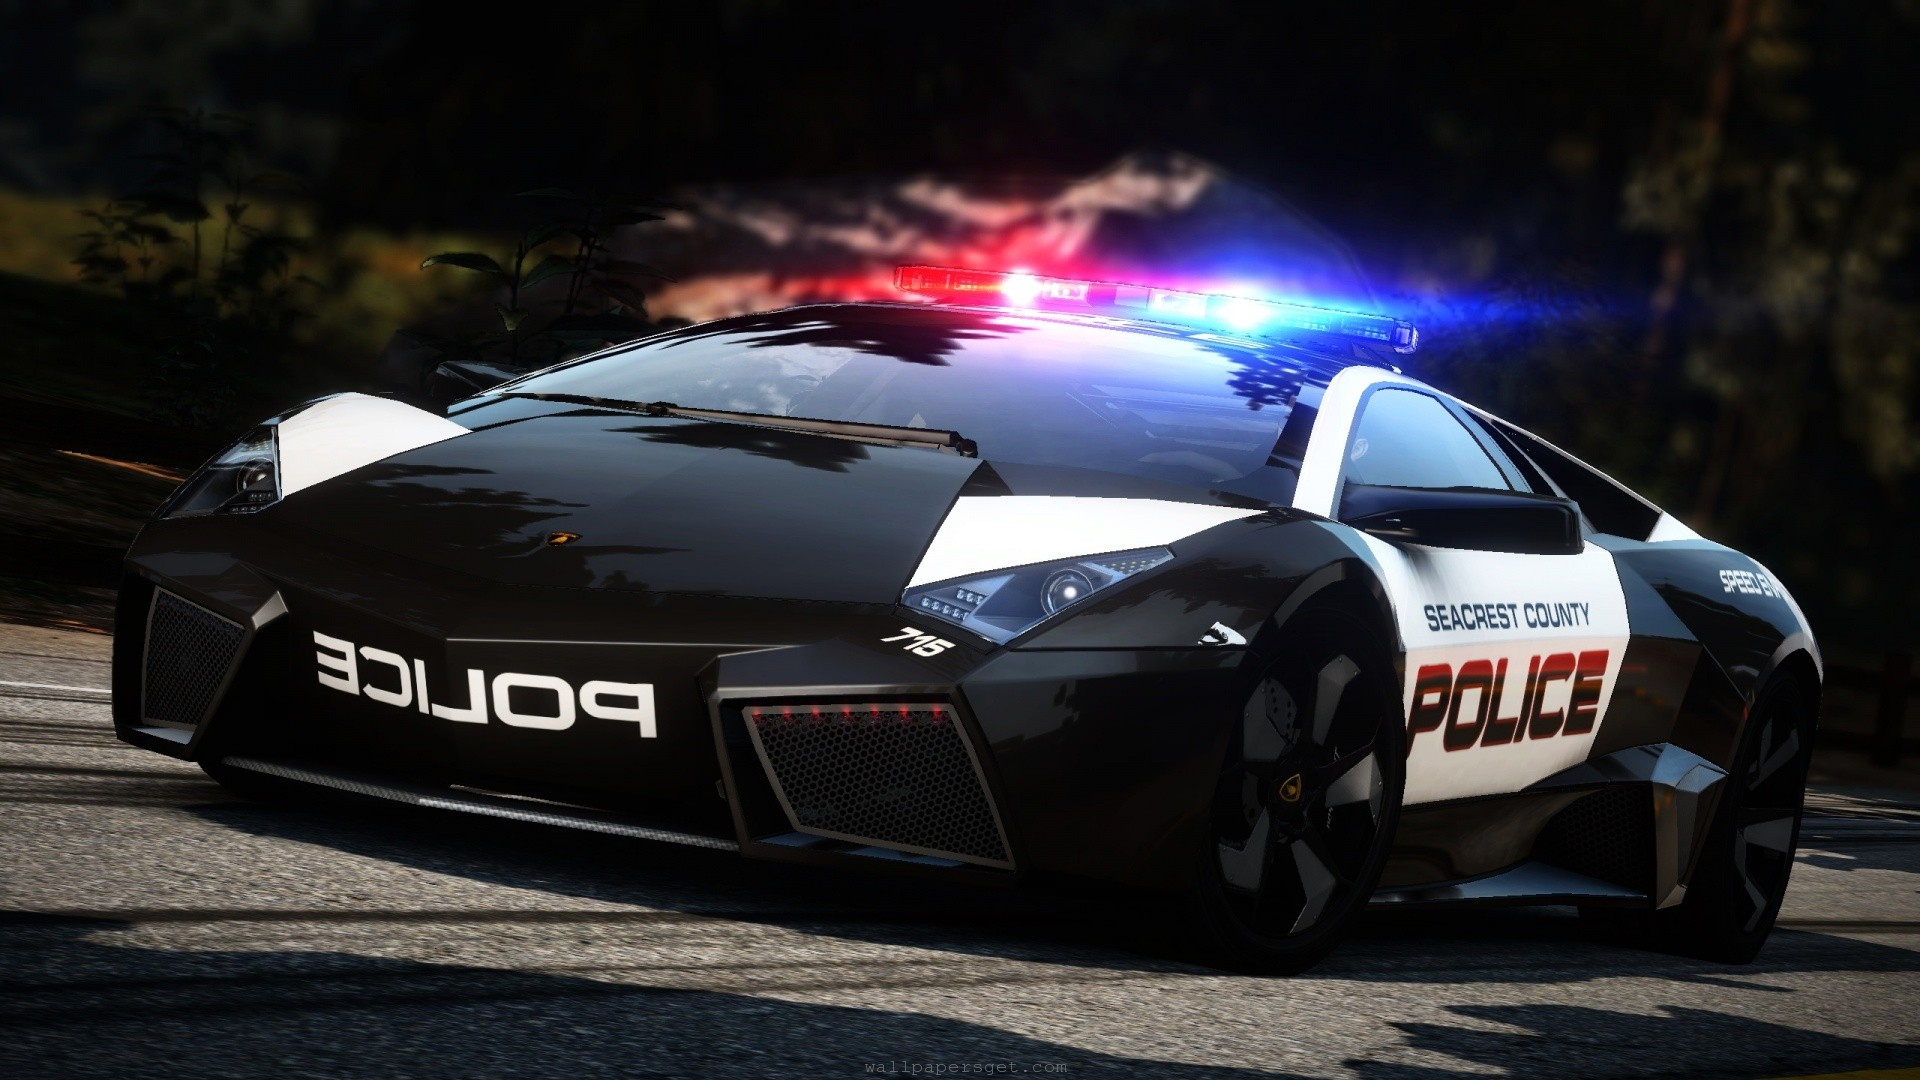 Cool Police Lamborghini – PS4Wallpapers.com